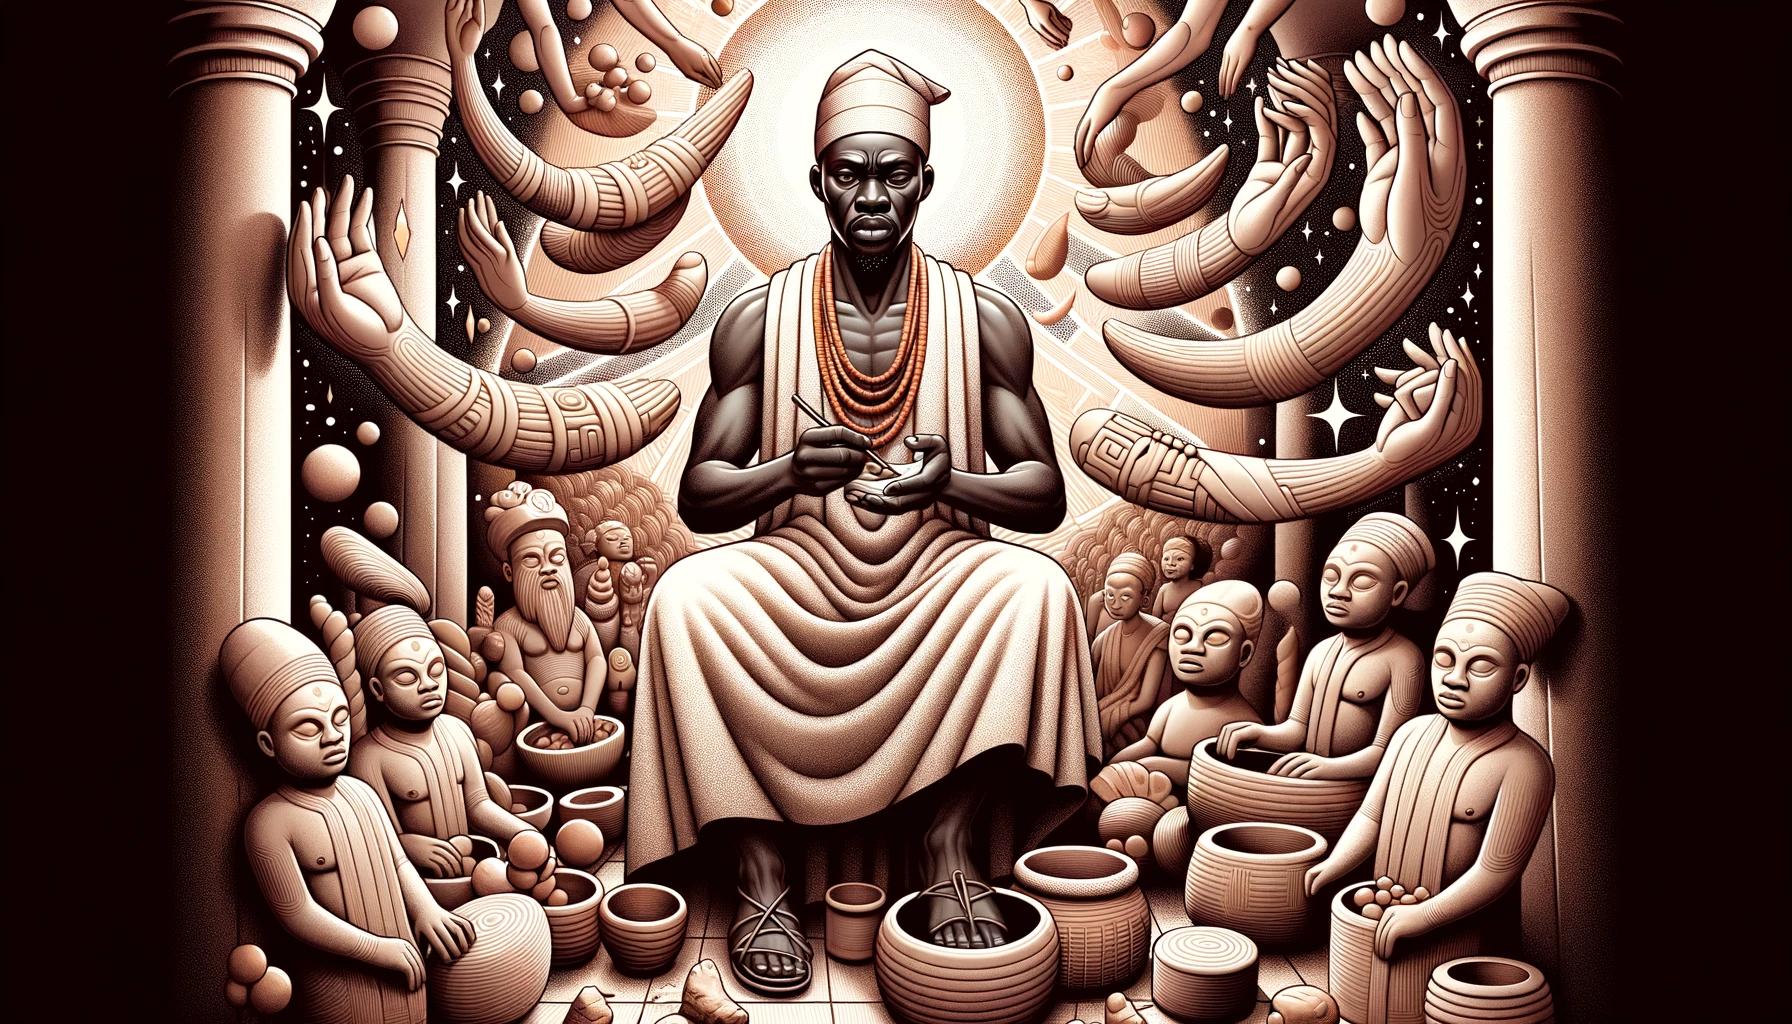 Ajala god: A Legendary Yoruba Artist, Herbalist, and Spiritual Leader